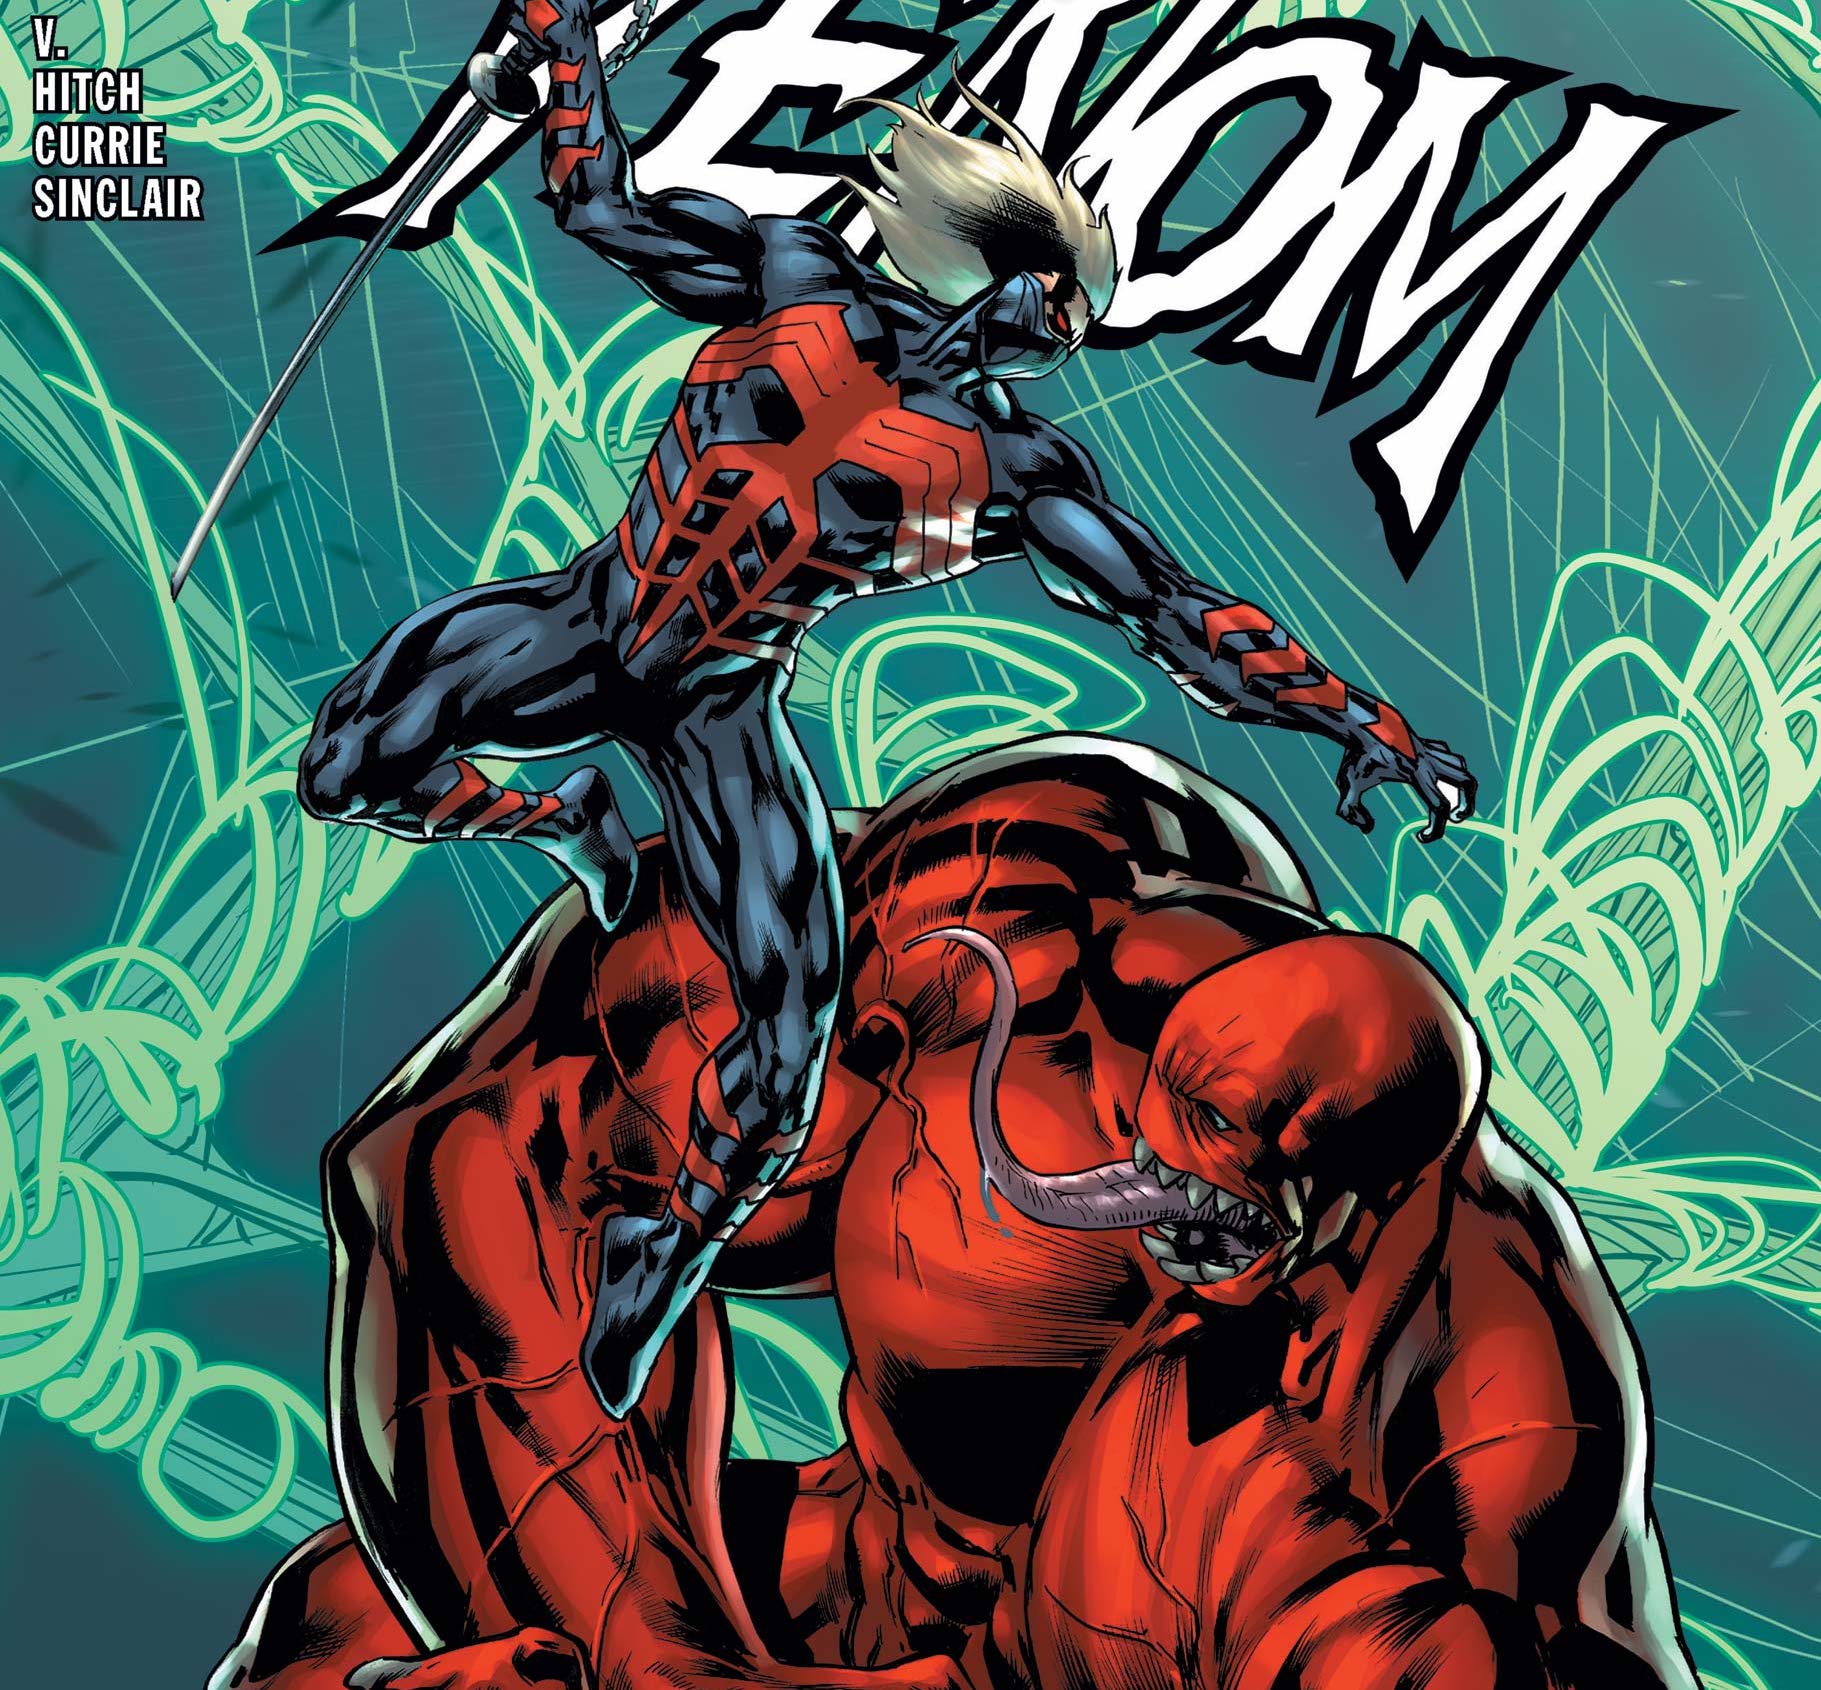 'Venom' #15 is a secret 'Red Goblin' origin